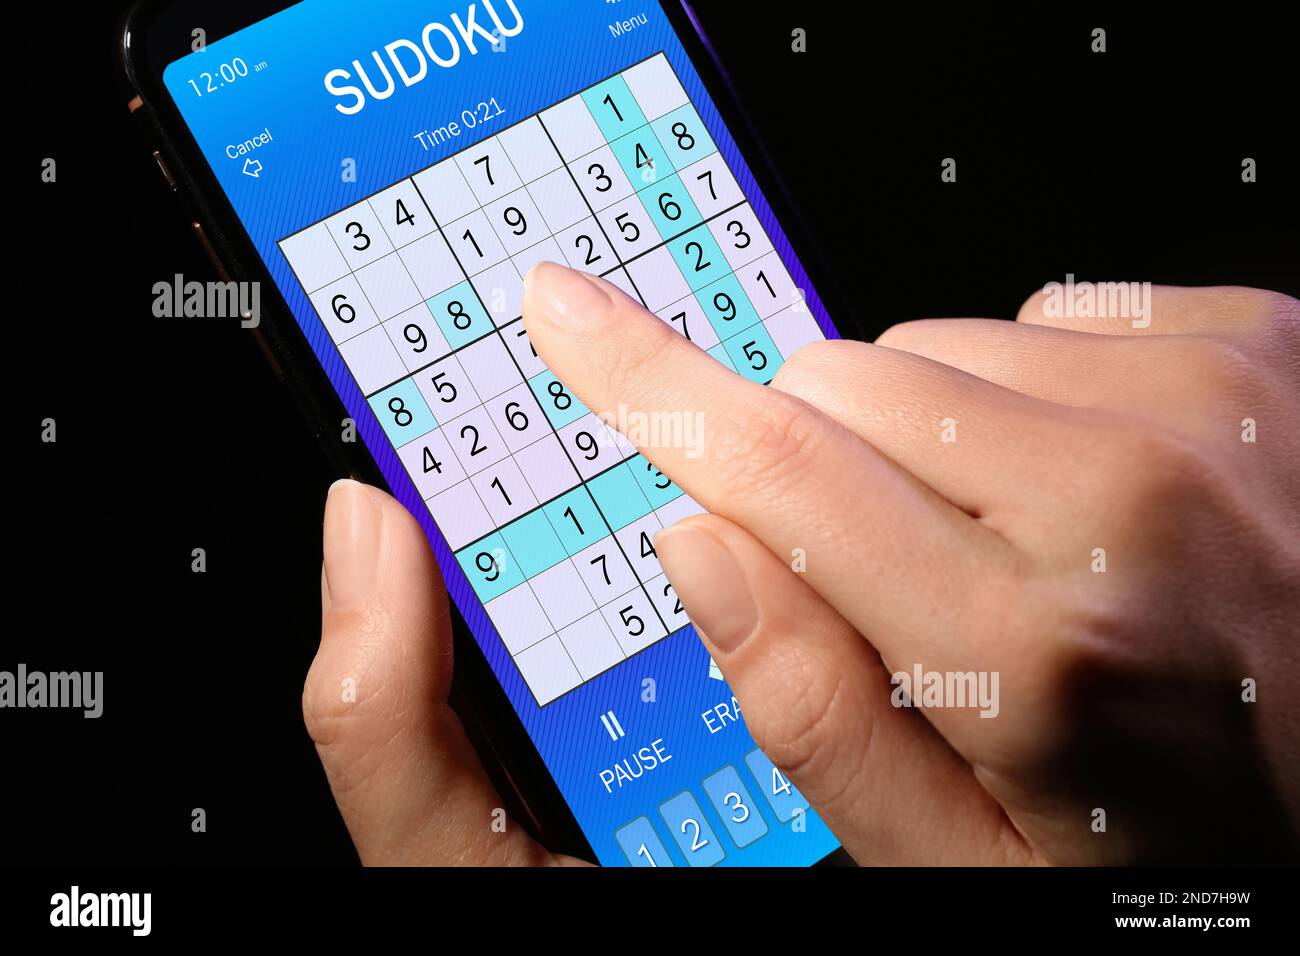 Woman playing sudoku game on smartphone, closeup Stock Photo